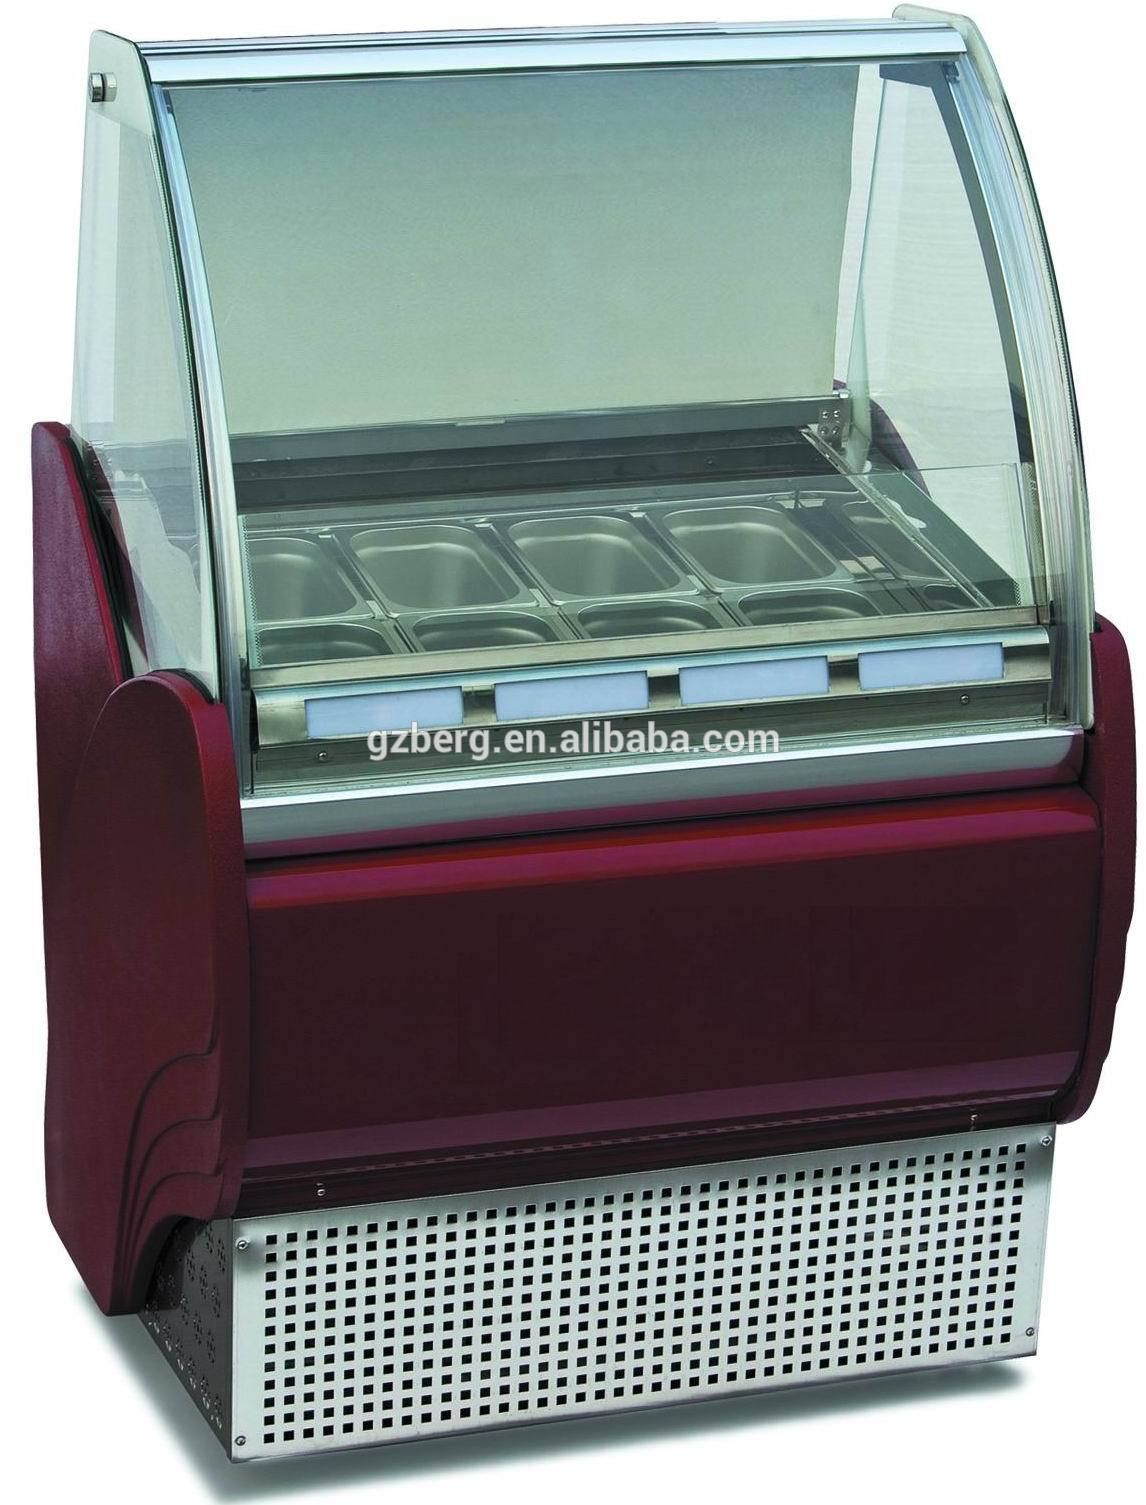 8 Trays Italian Gelato Display Freezer With Danfoss Compressor intended for size 1146 X 1505